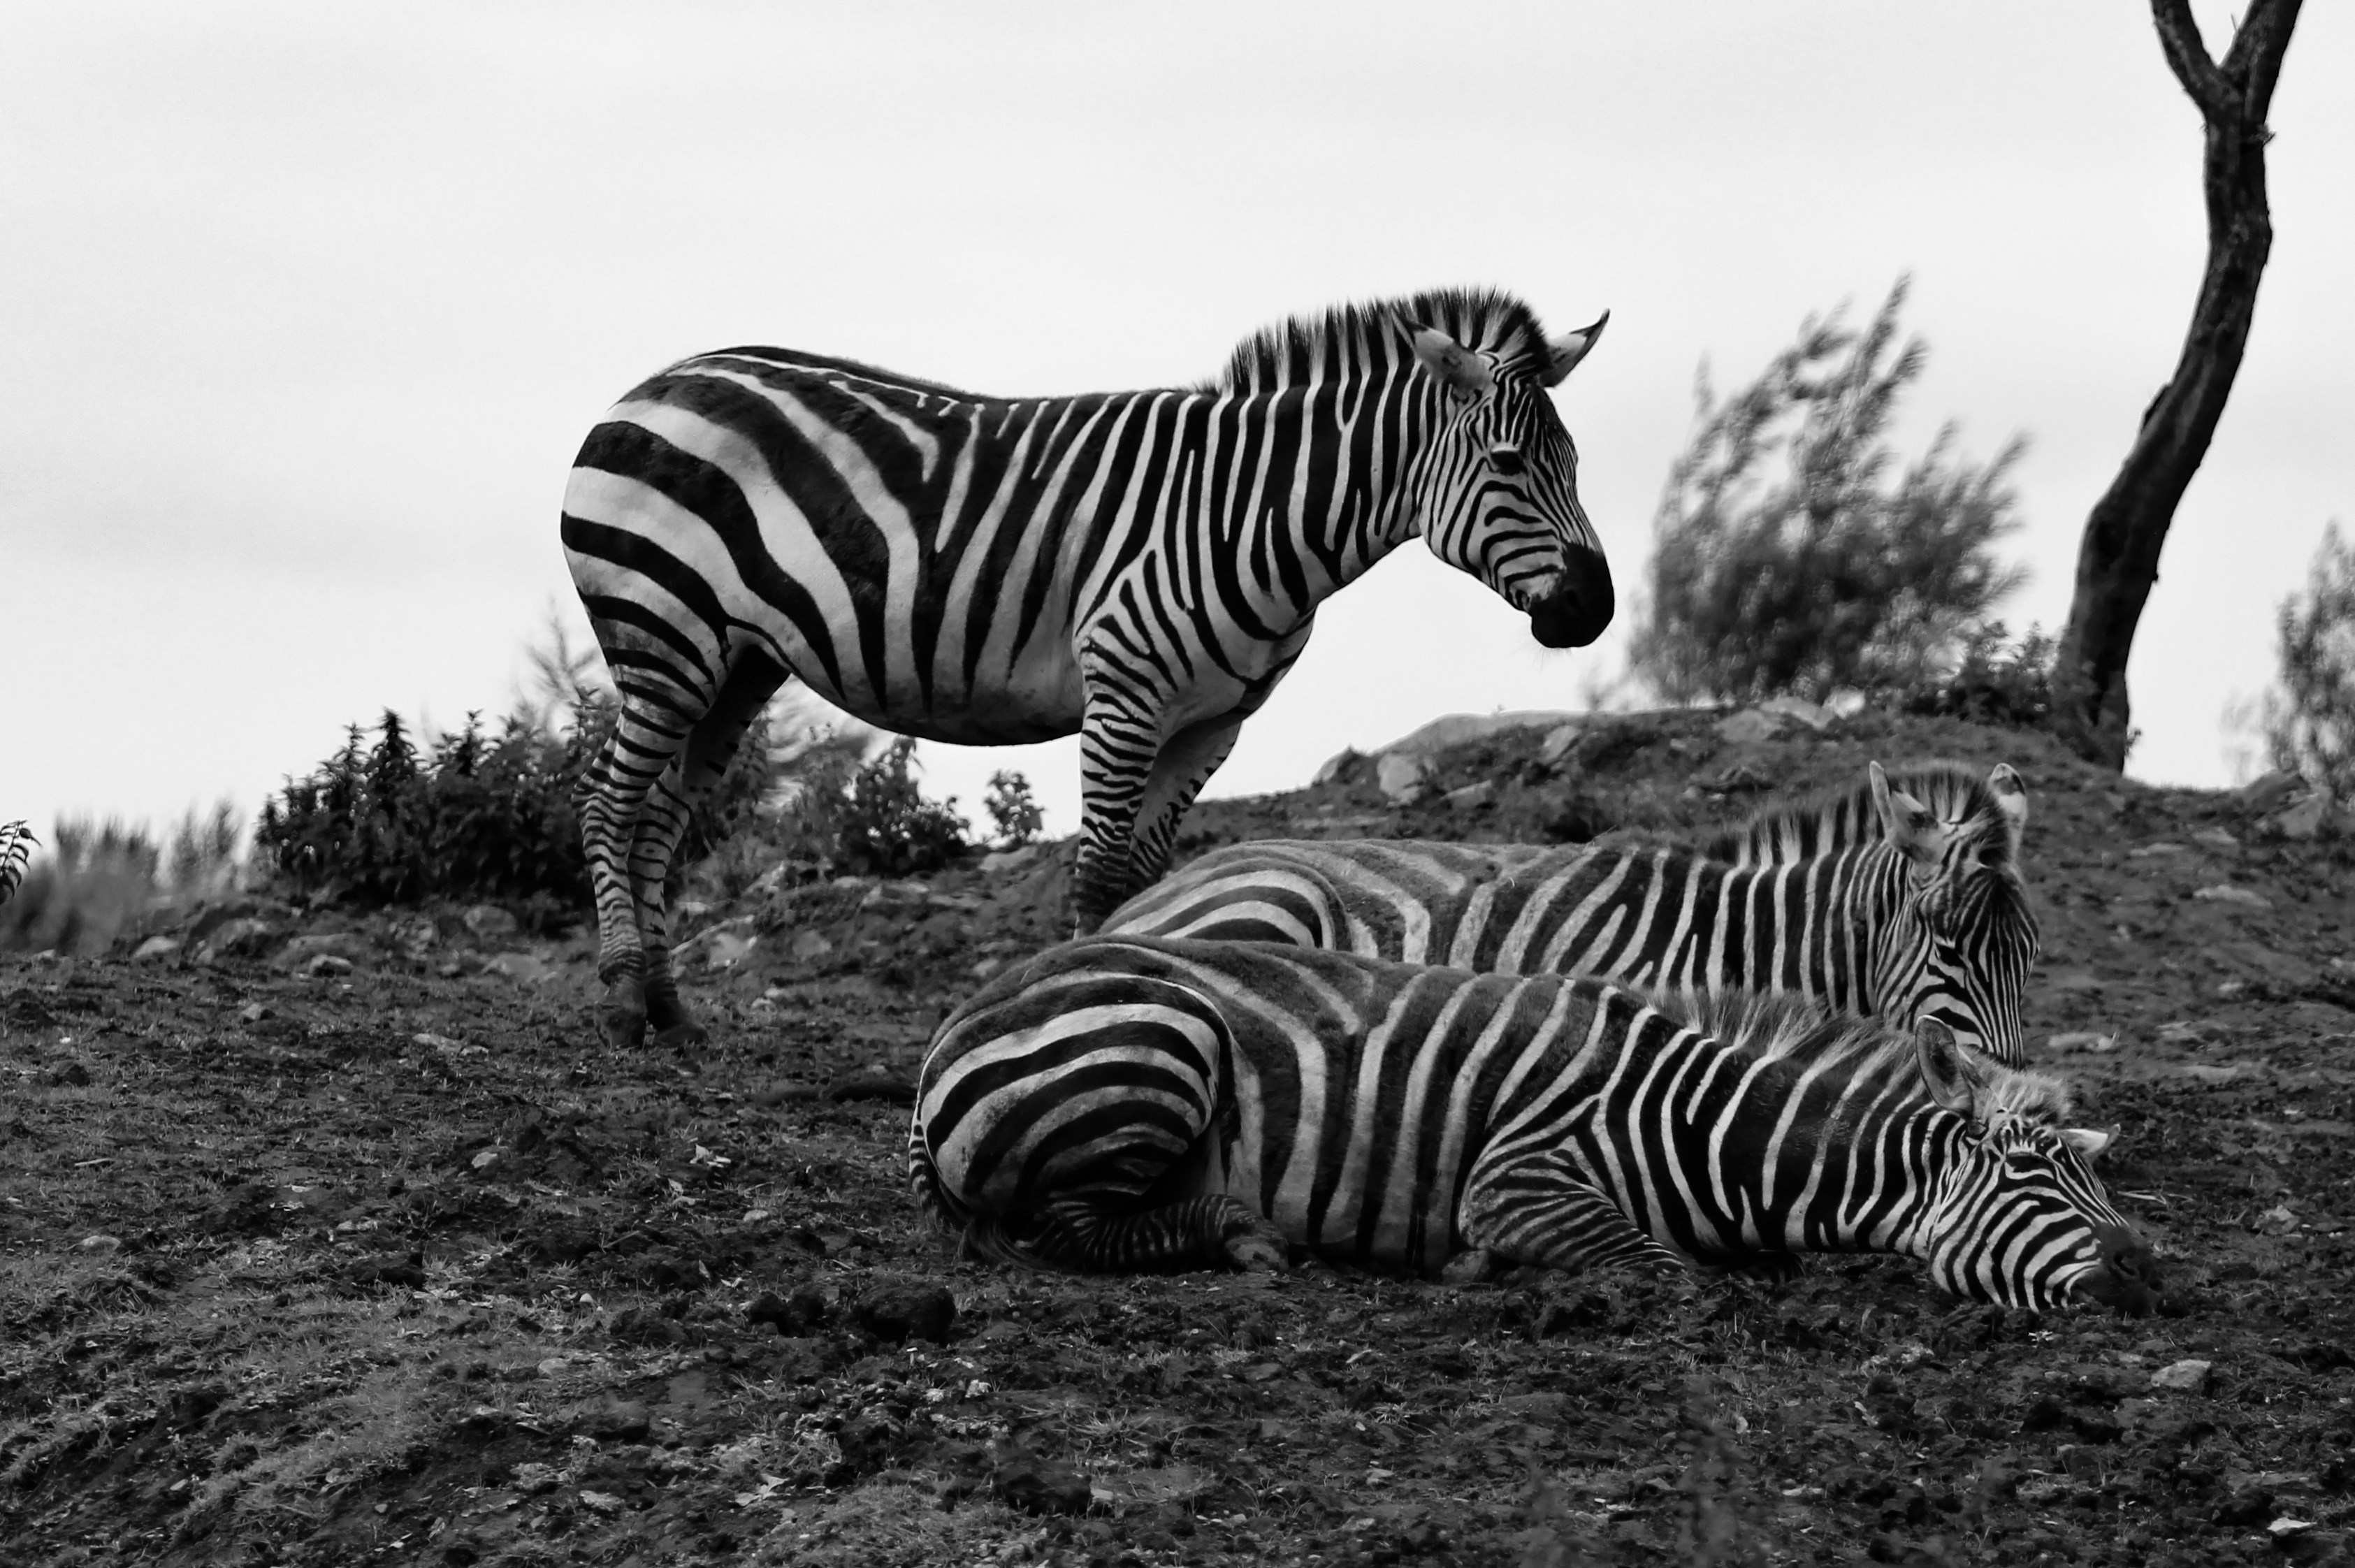 grayscale photo of zebra on grass field